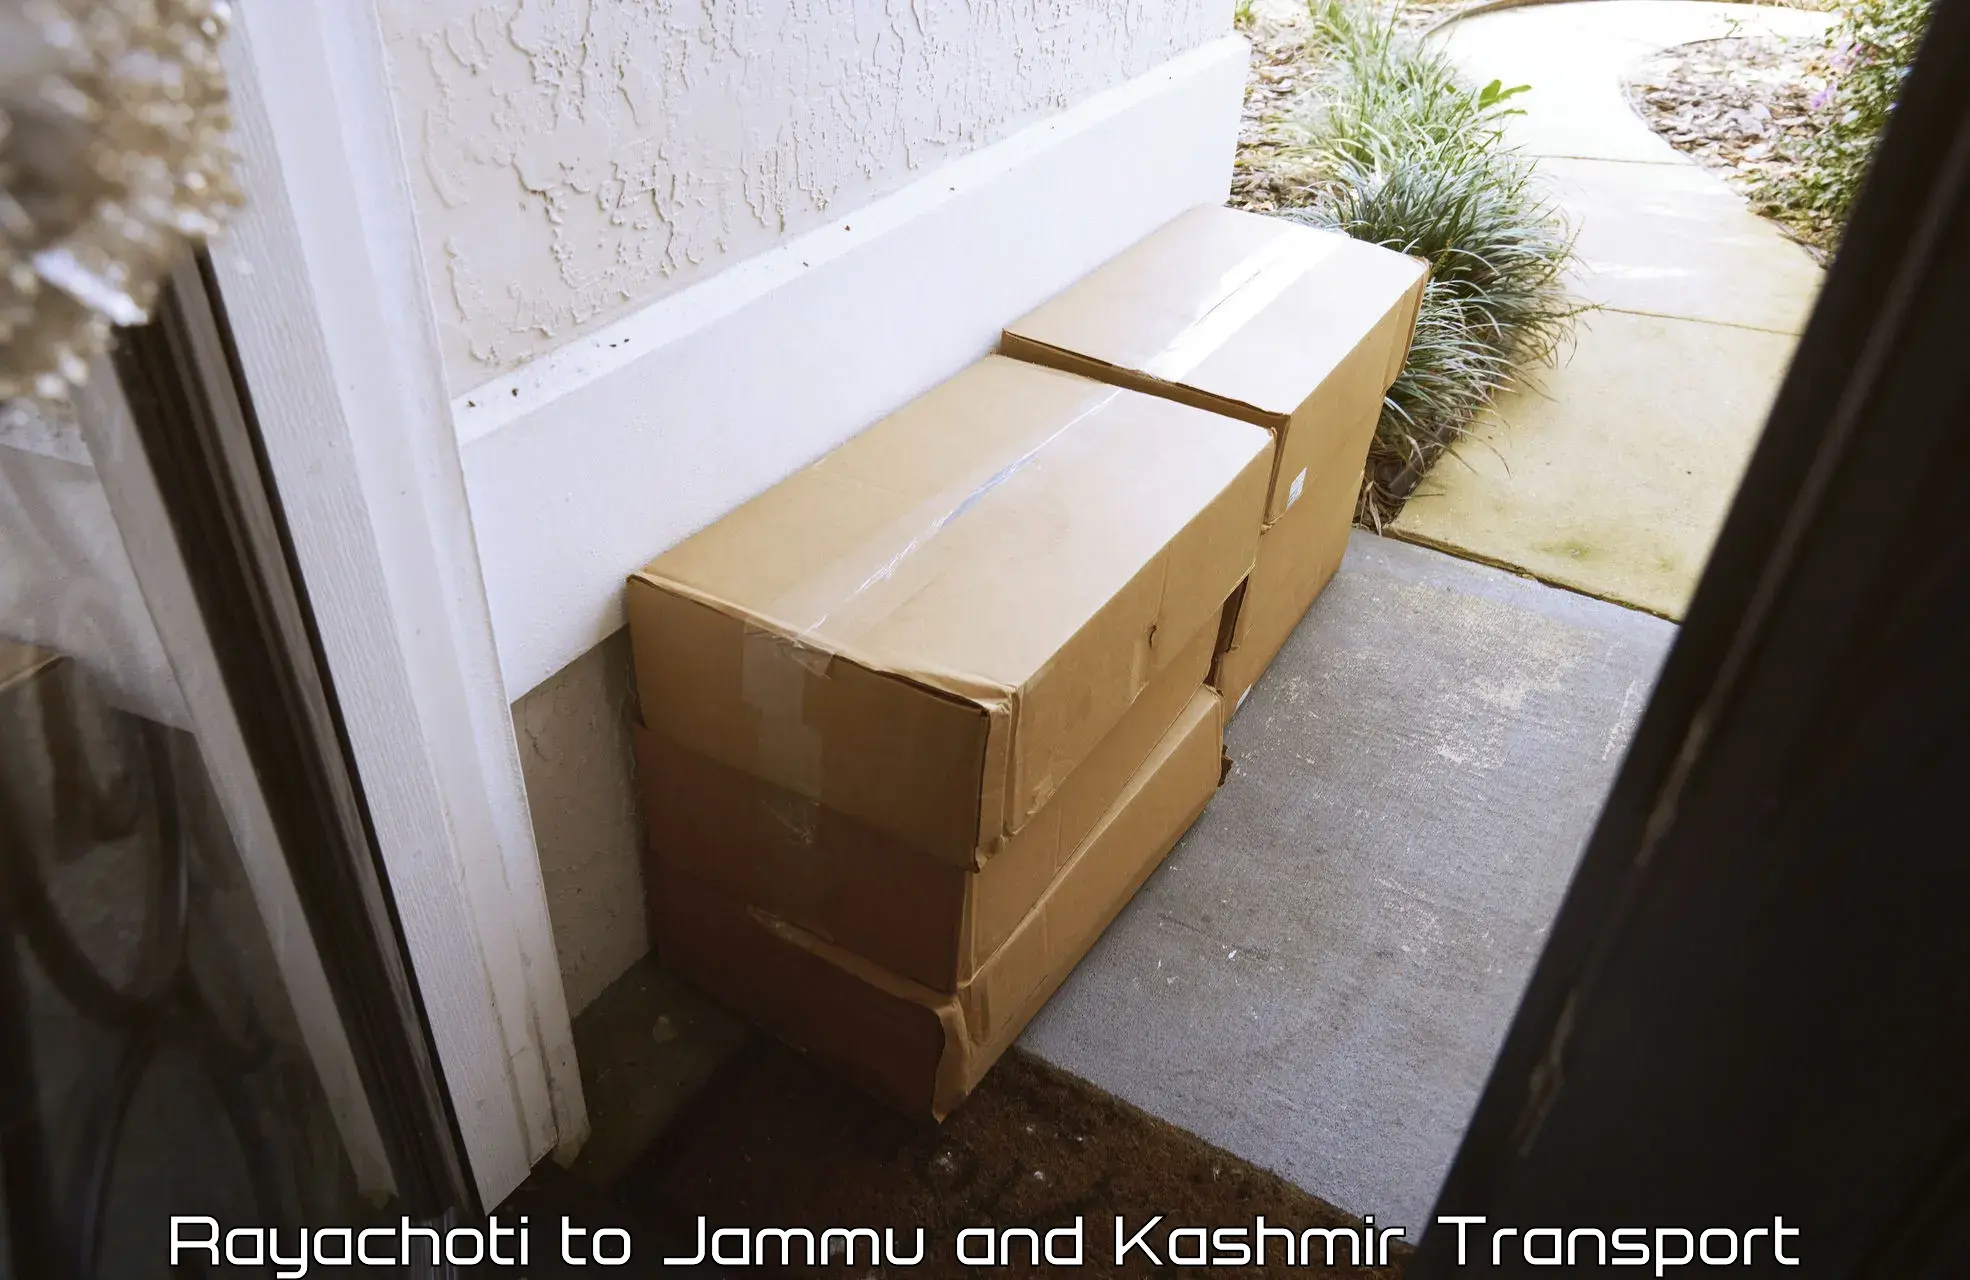 Goods delivery service Rayachoti to Jammu and Kashmir